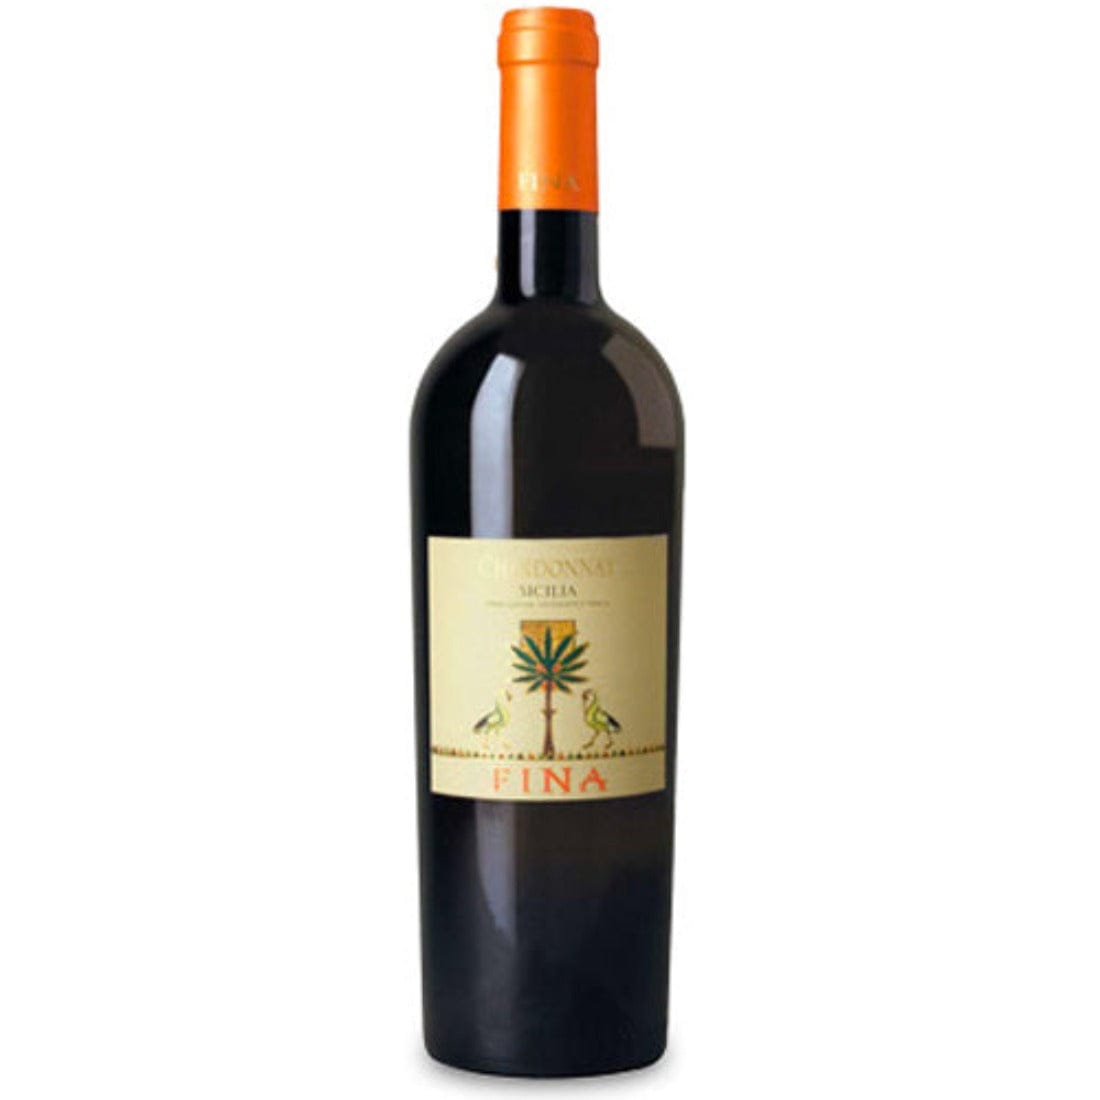 Chardonnay 2020 Igt Terre Siciliane - Cantine Fina-Vinolog24.com